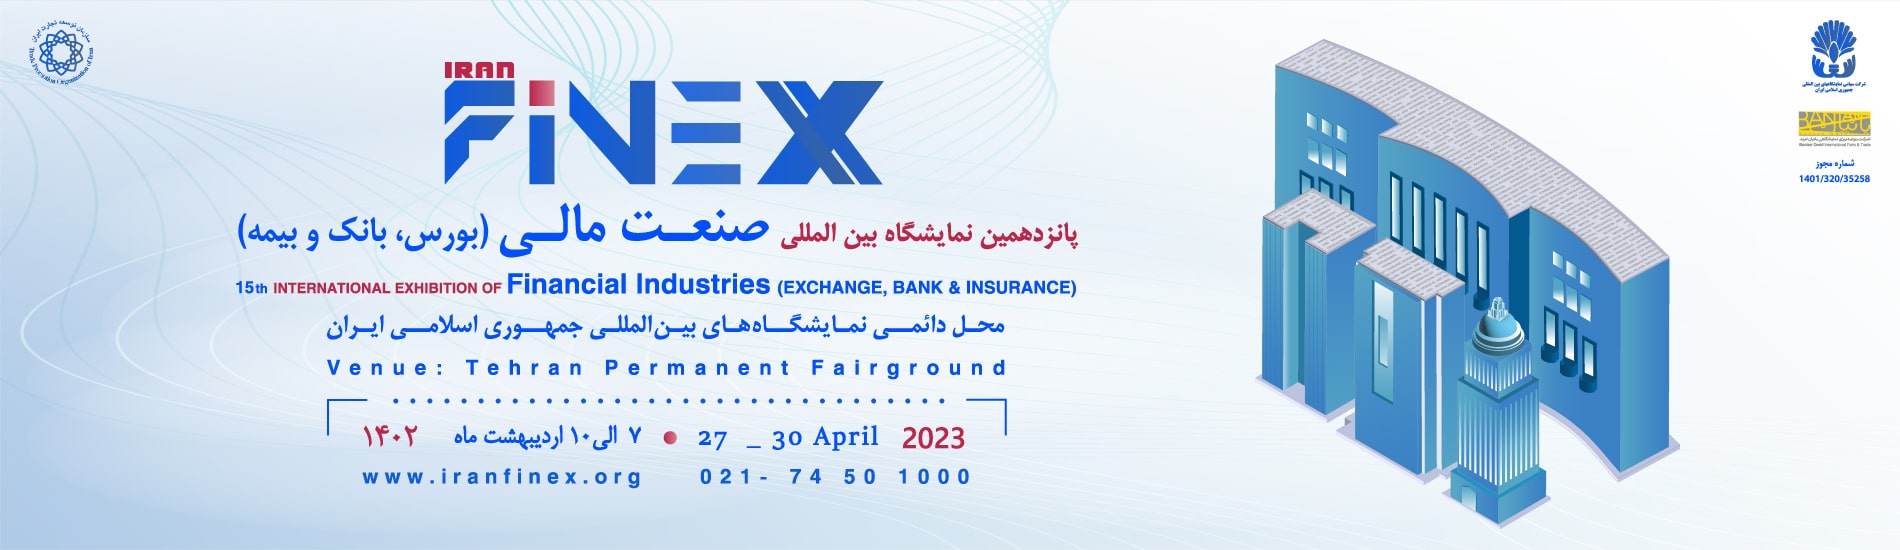 15th Iran Finex Banner Slider 2023 - The 15th International Exhibition of Financial Industries (Exchange, Bank & Insurance) in Tehran/Iran